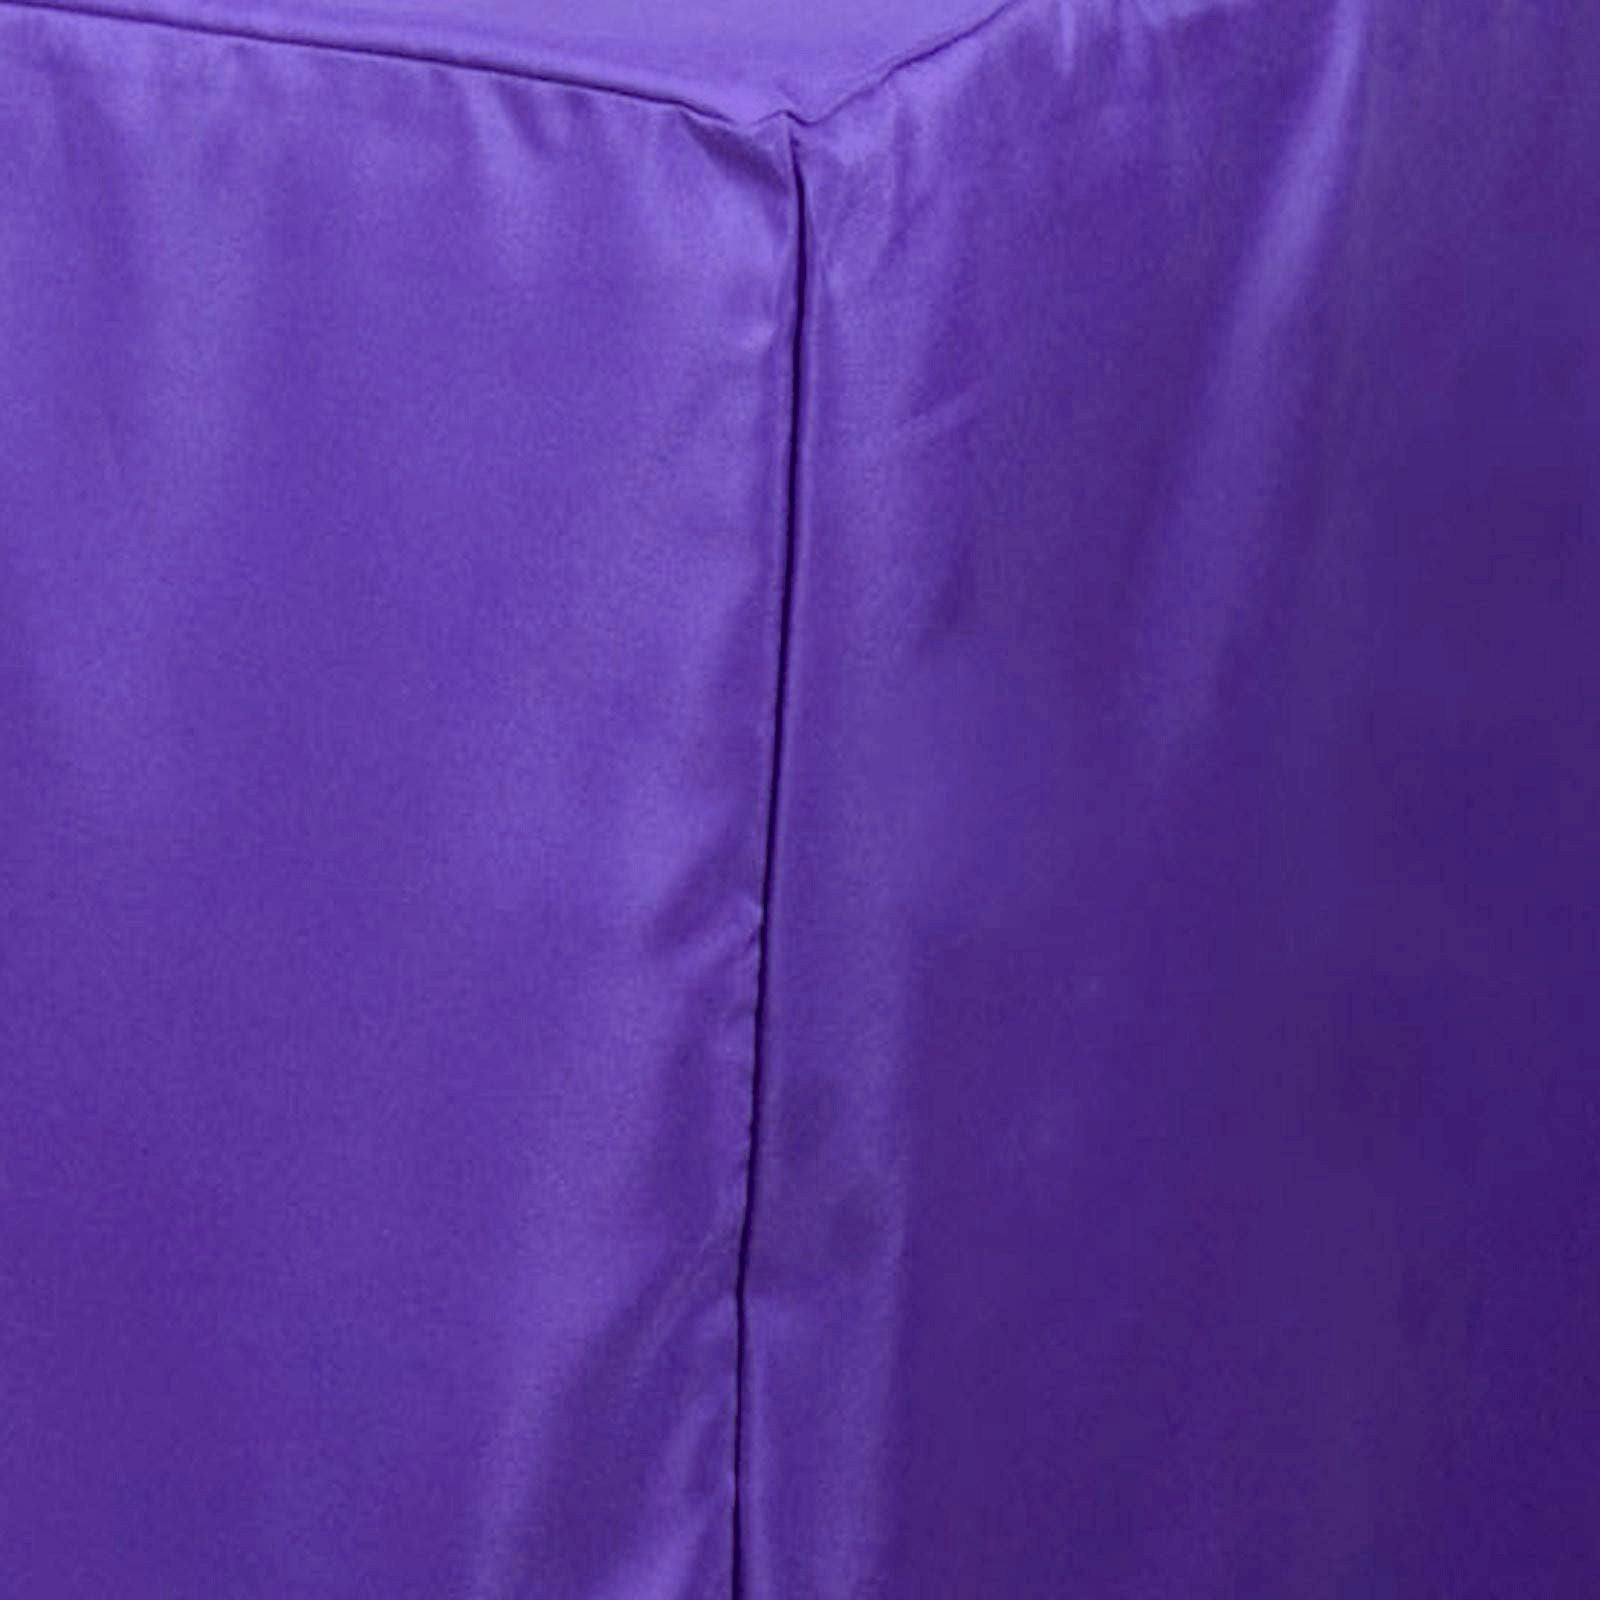 6ft Purple Polyester Rectangular Table Cover | eFavormart.com